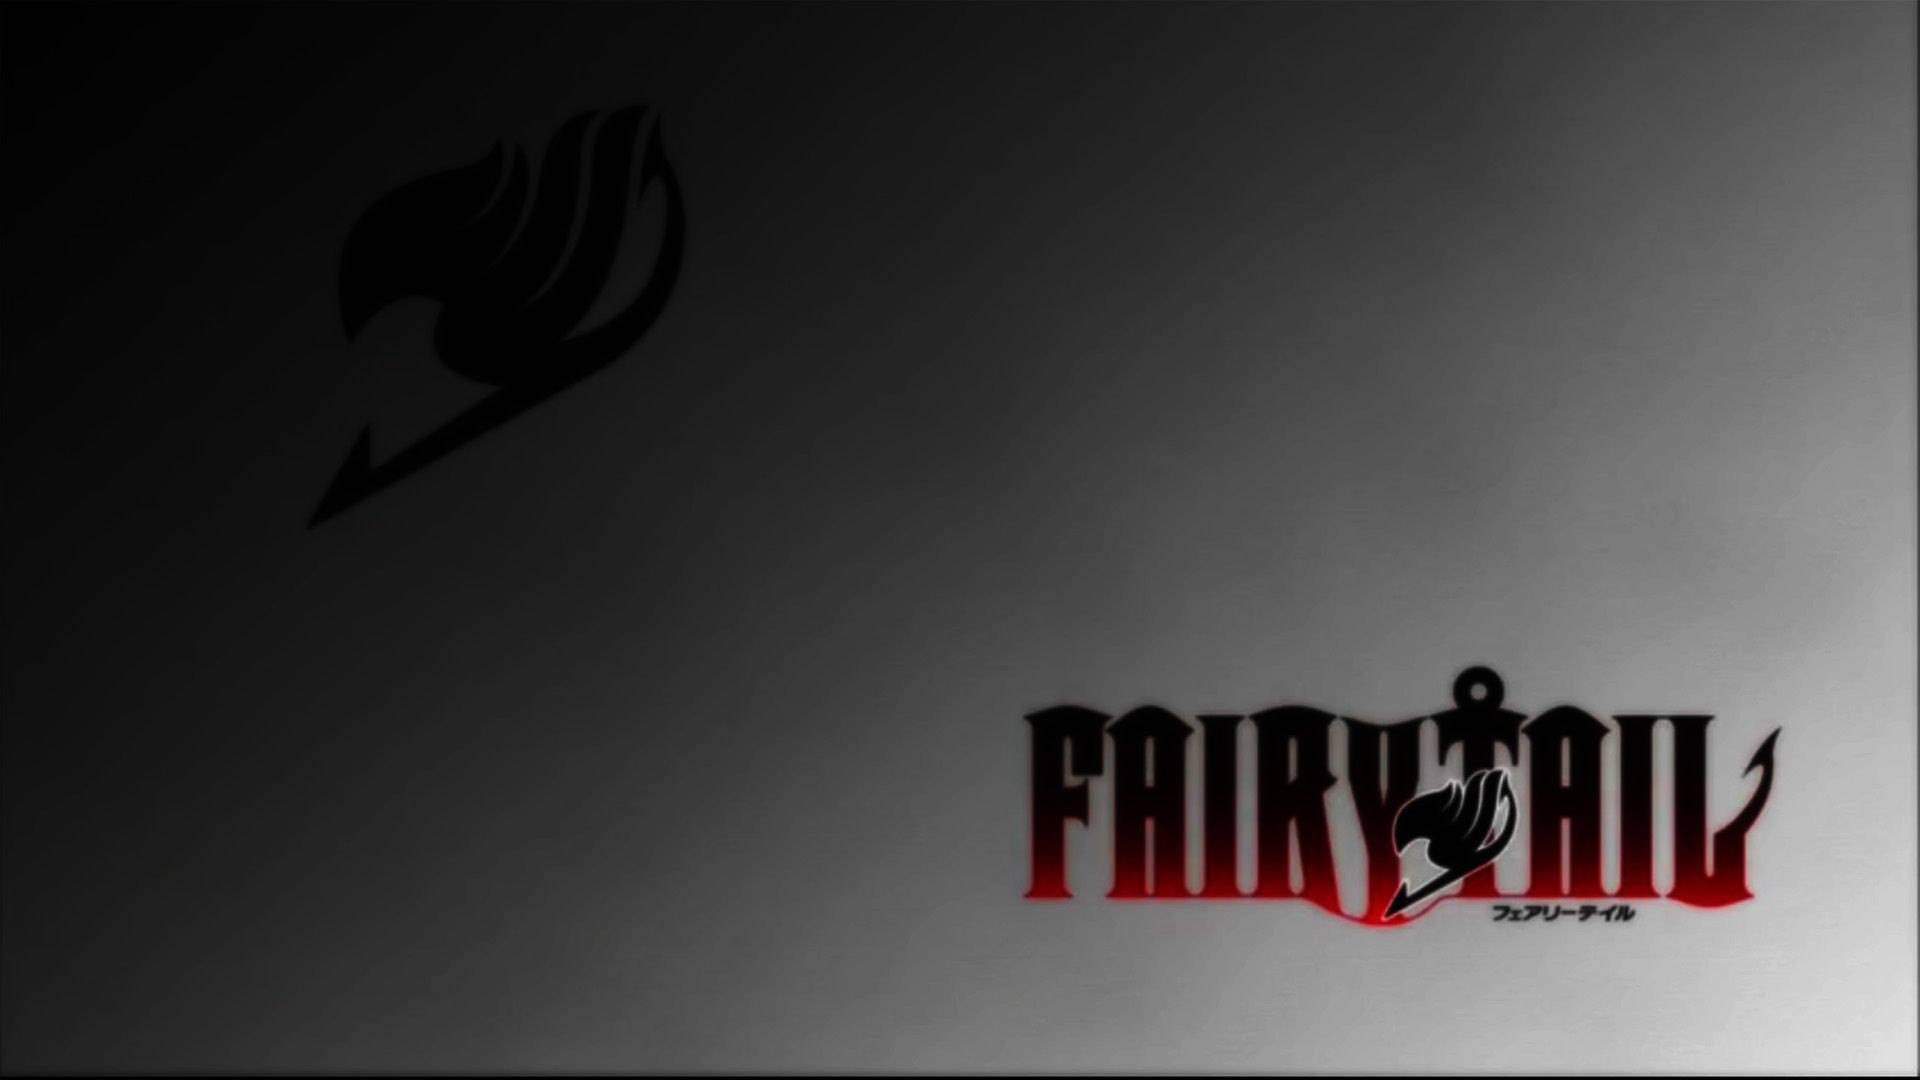 1920x1080 Fairy Tail Logo Hd Wallpaper HD anime Wallpaper Hd Anime Wallpapers, Hd -hintergrundbilder,